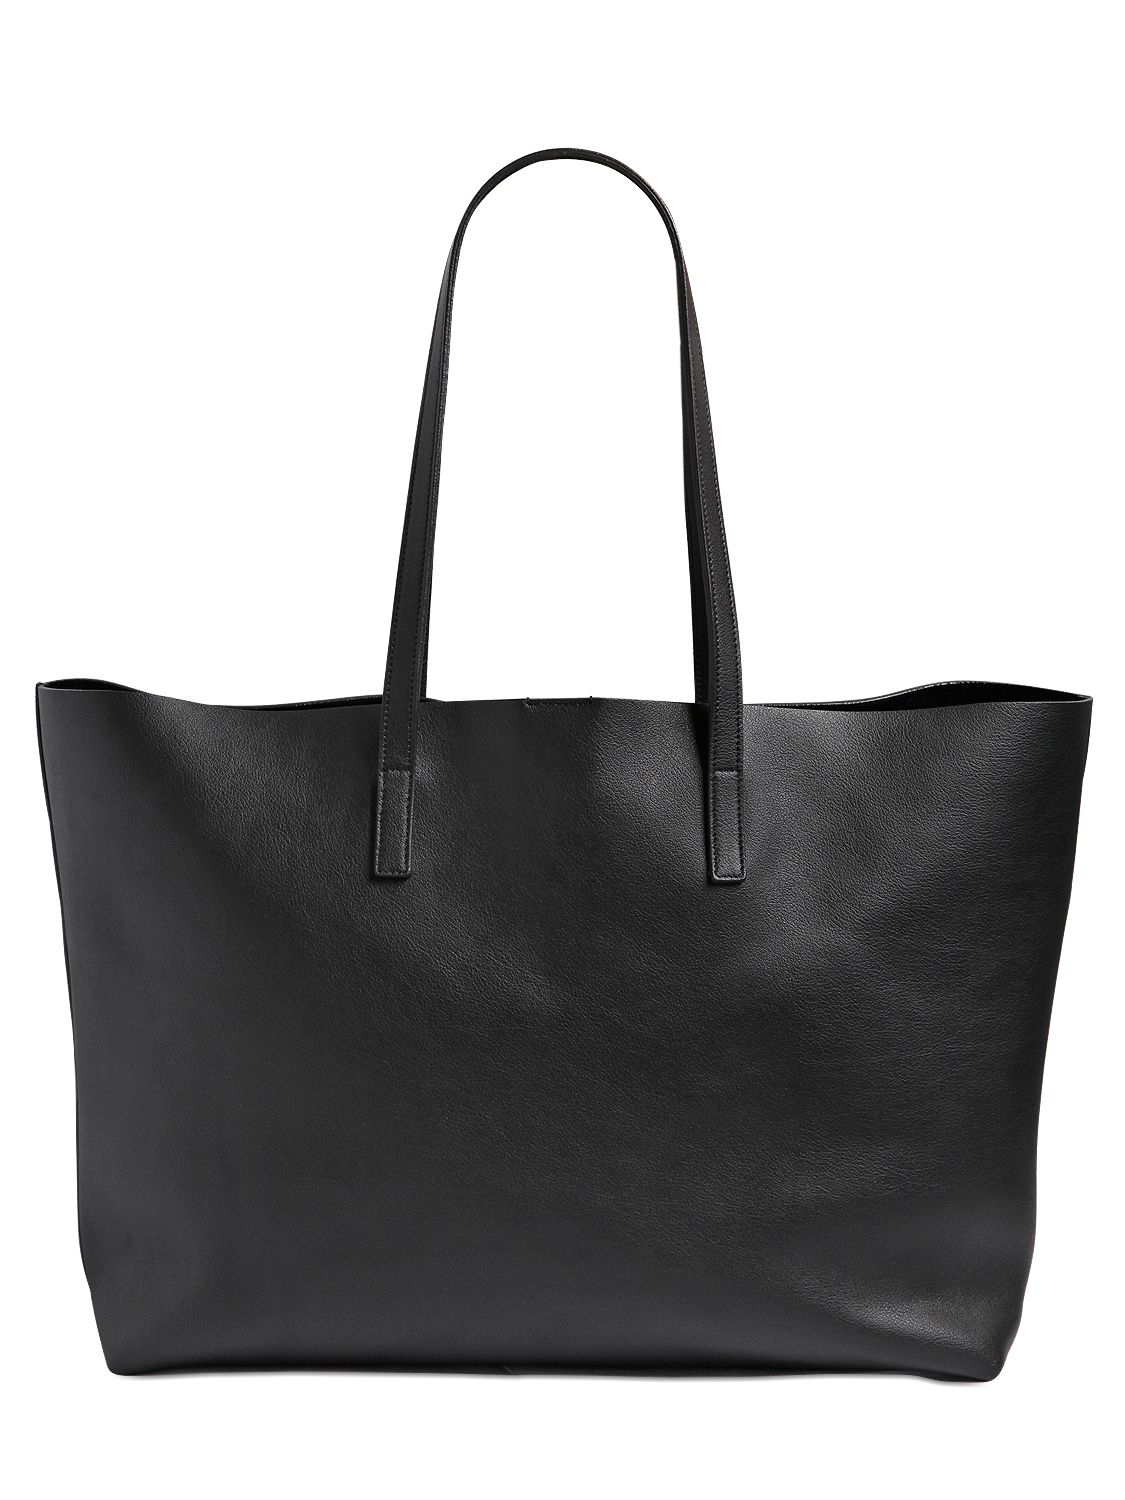 Lyst - Saint Laurent Soft Leather Tote Bag in Black